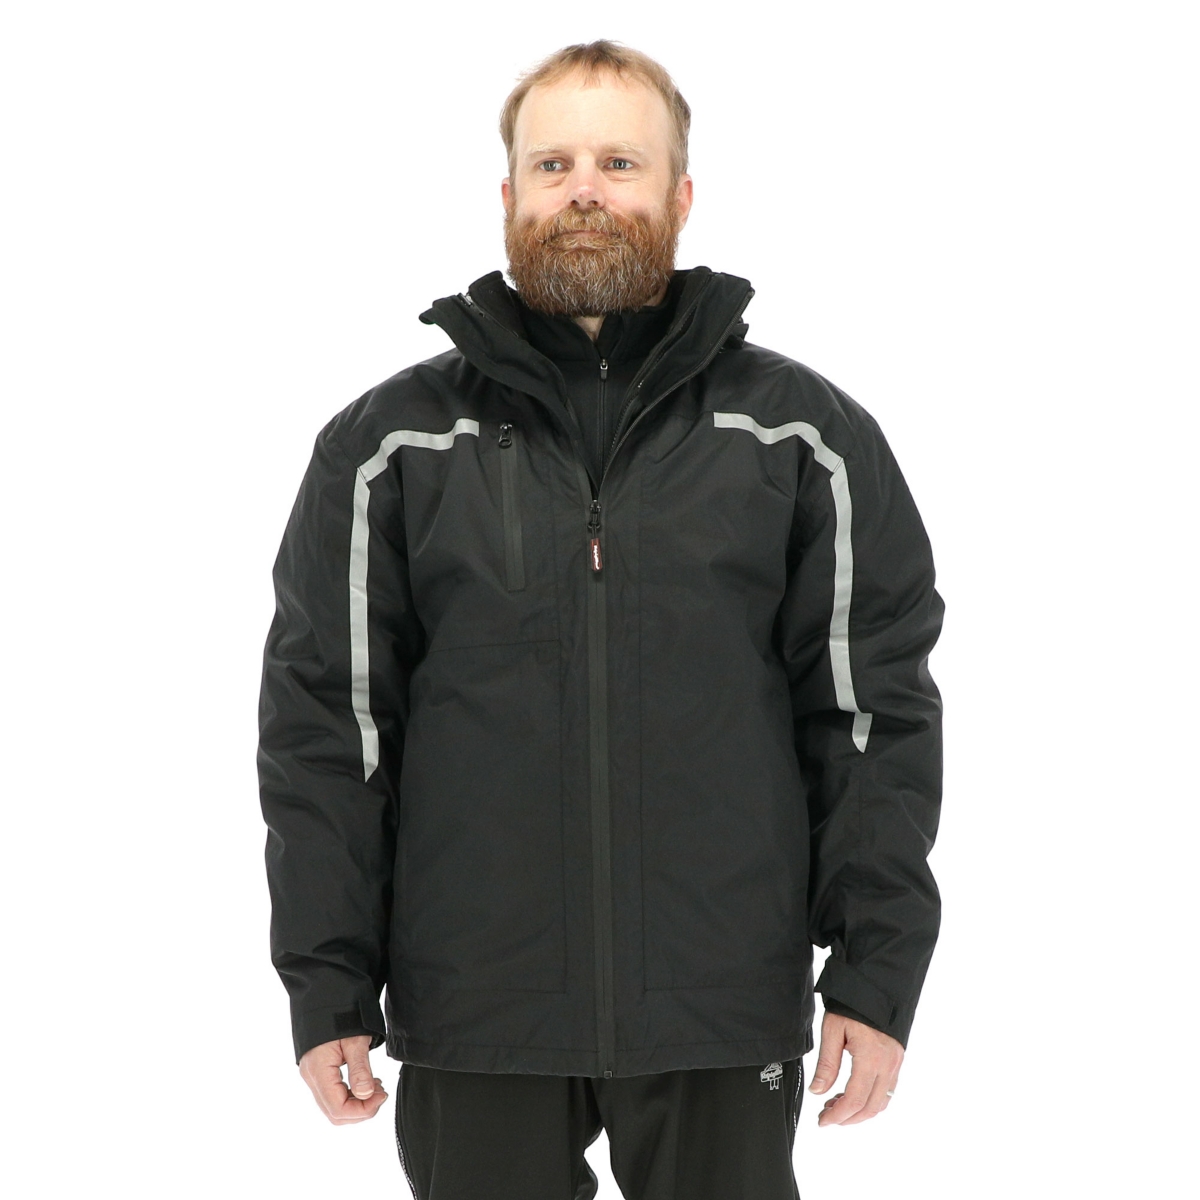 Big & Tall 3-in-1 Insulated Rainwear Systems Jacket - Black